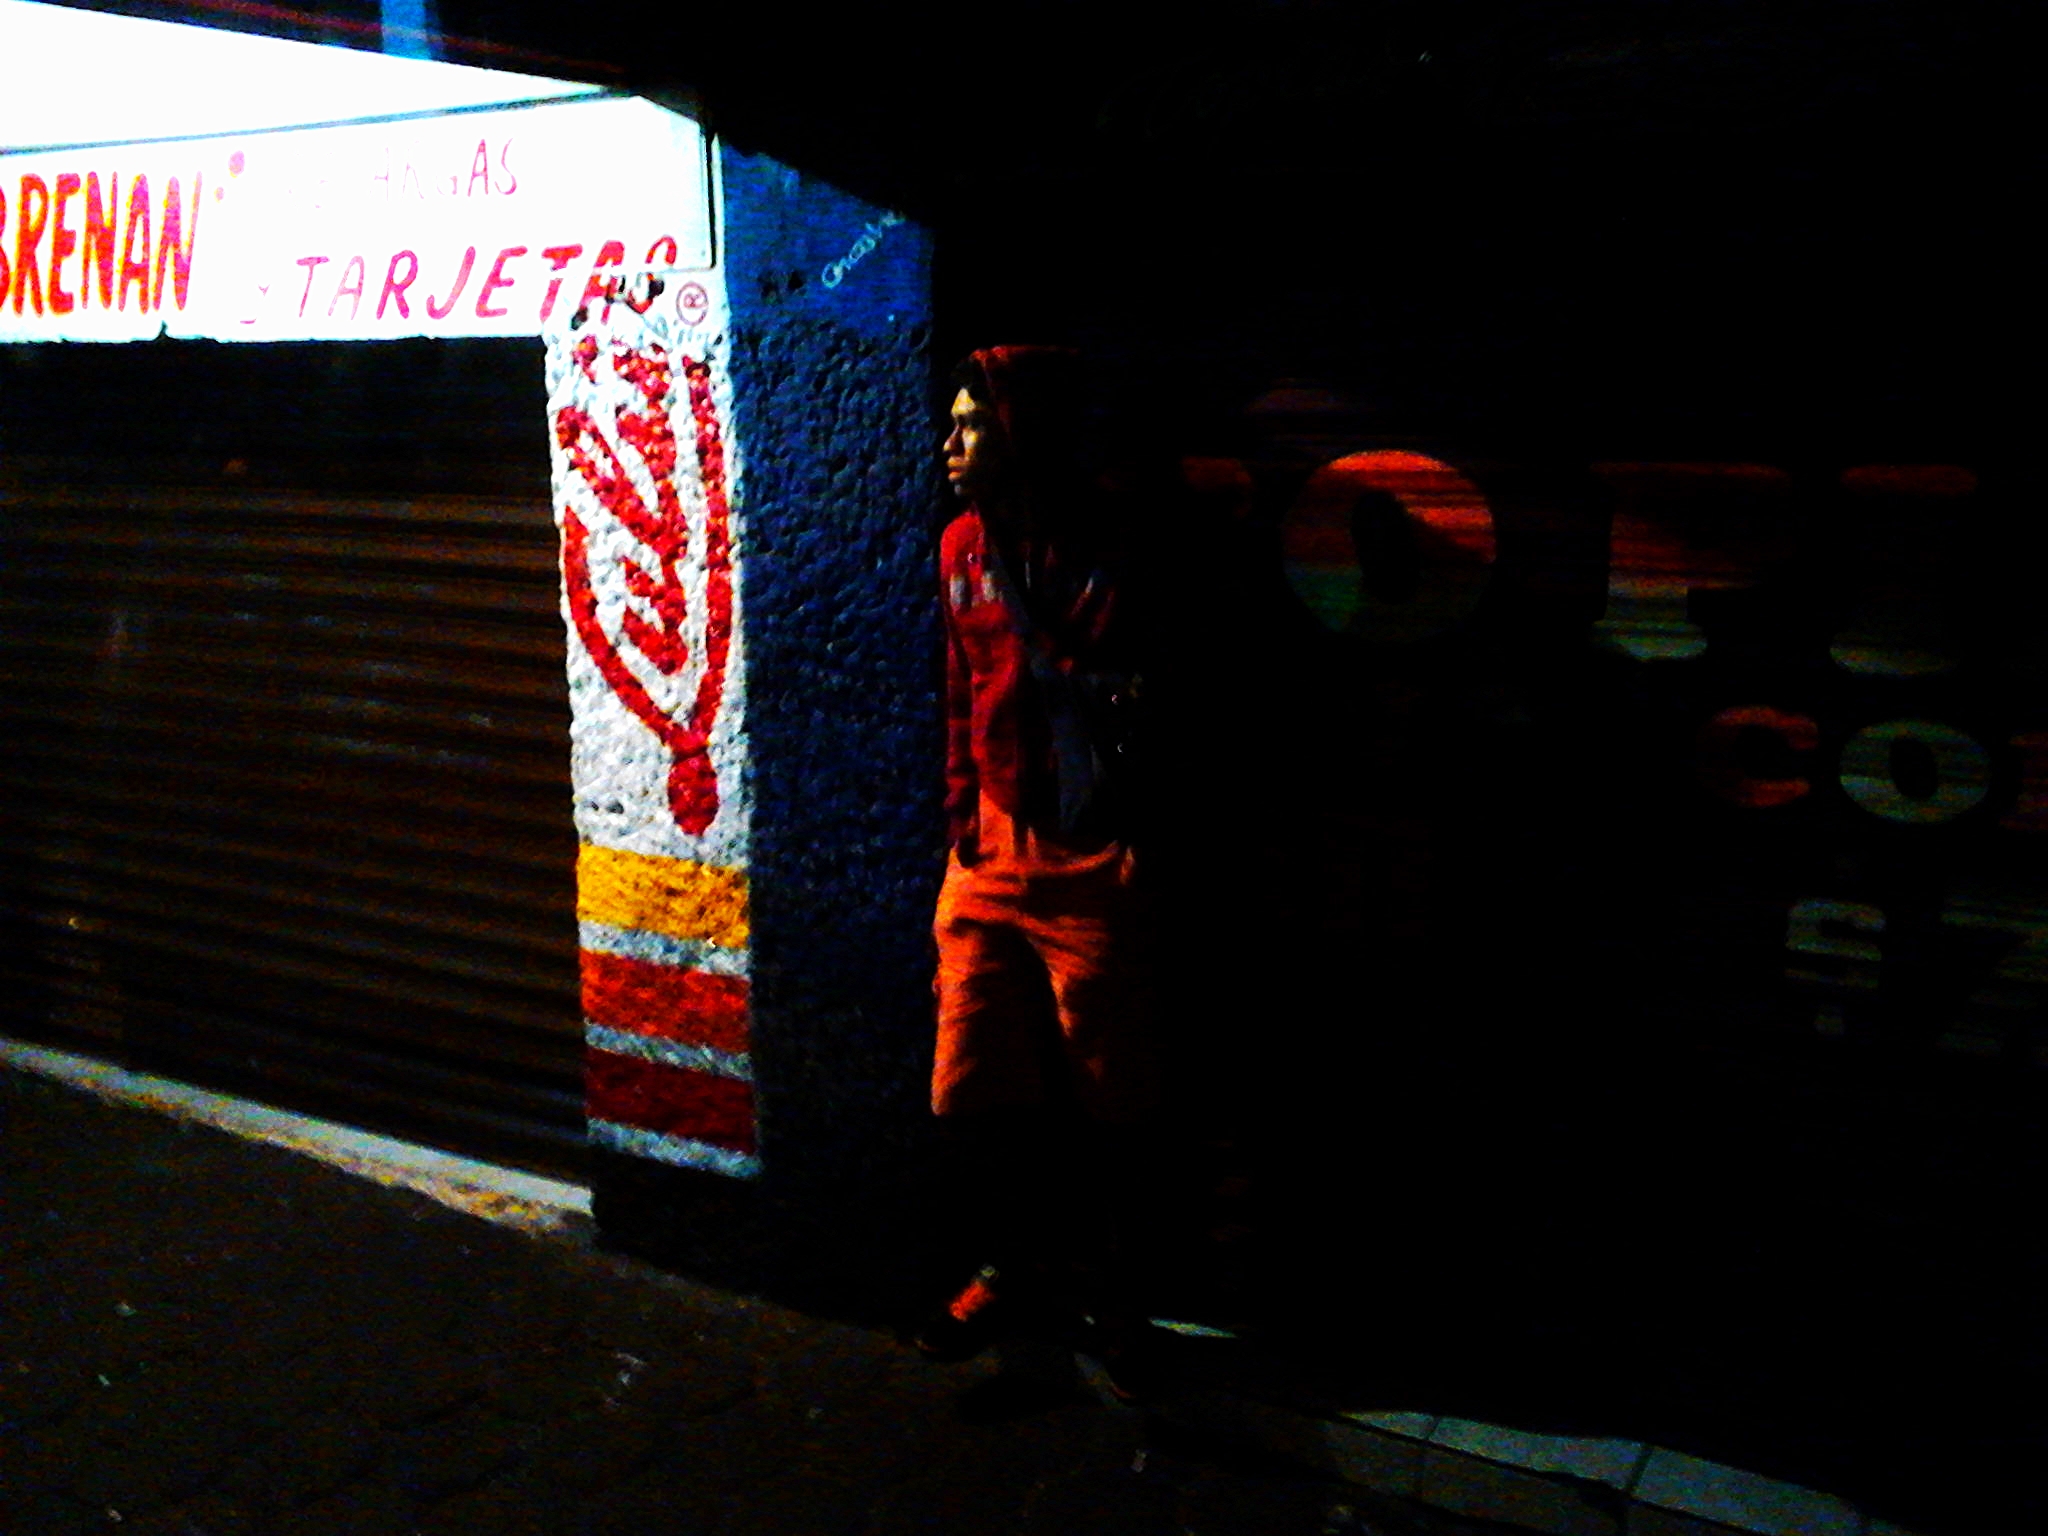 a dark street scene with a neon red and white umbrella